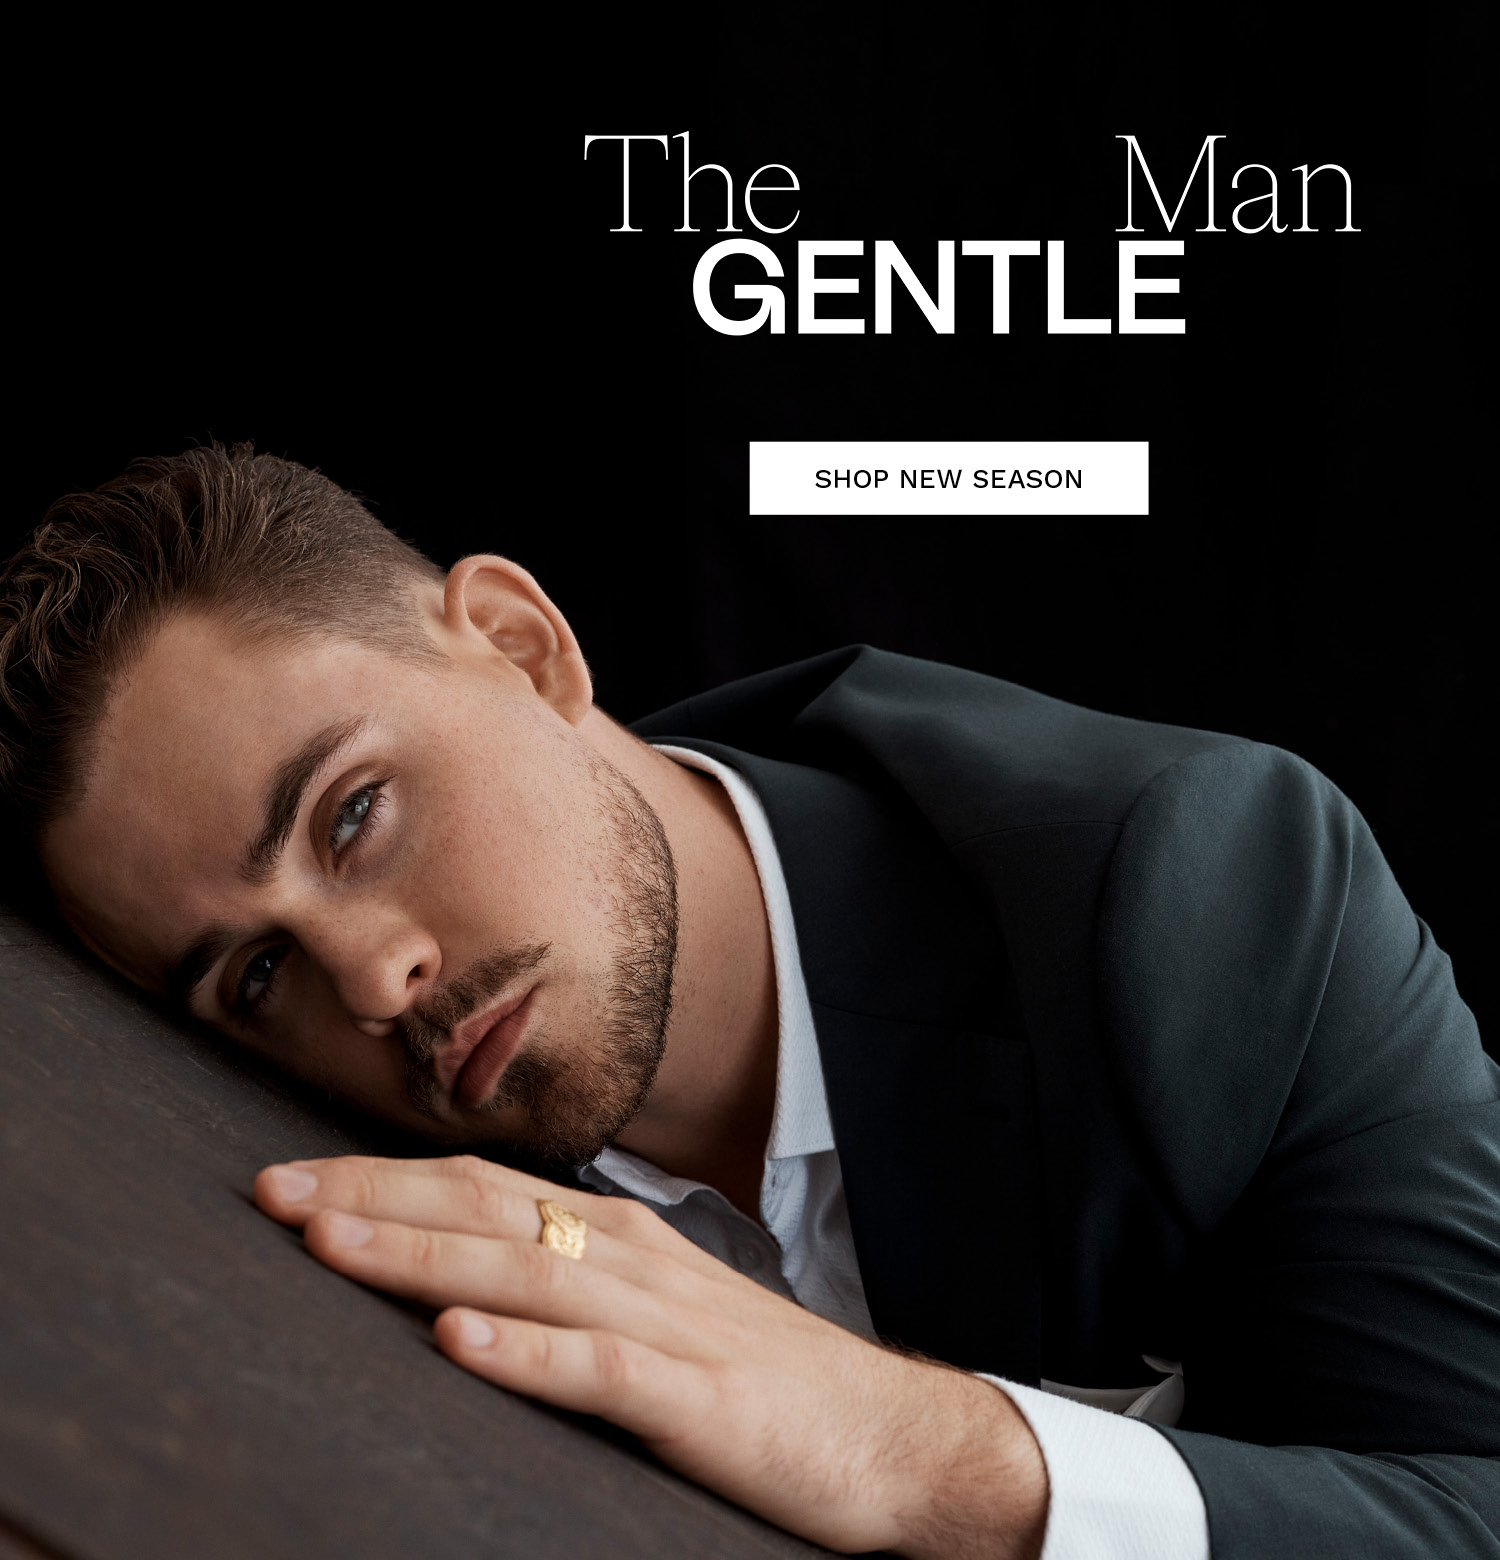 The Gentle Man - Shop New Season